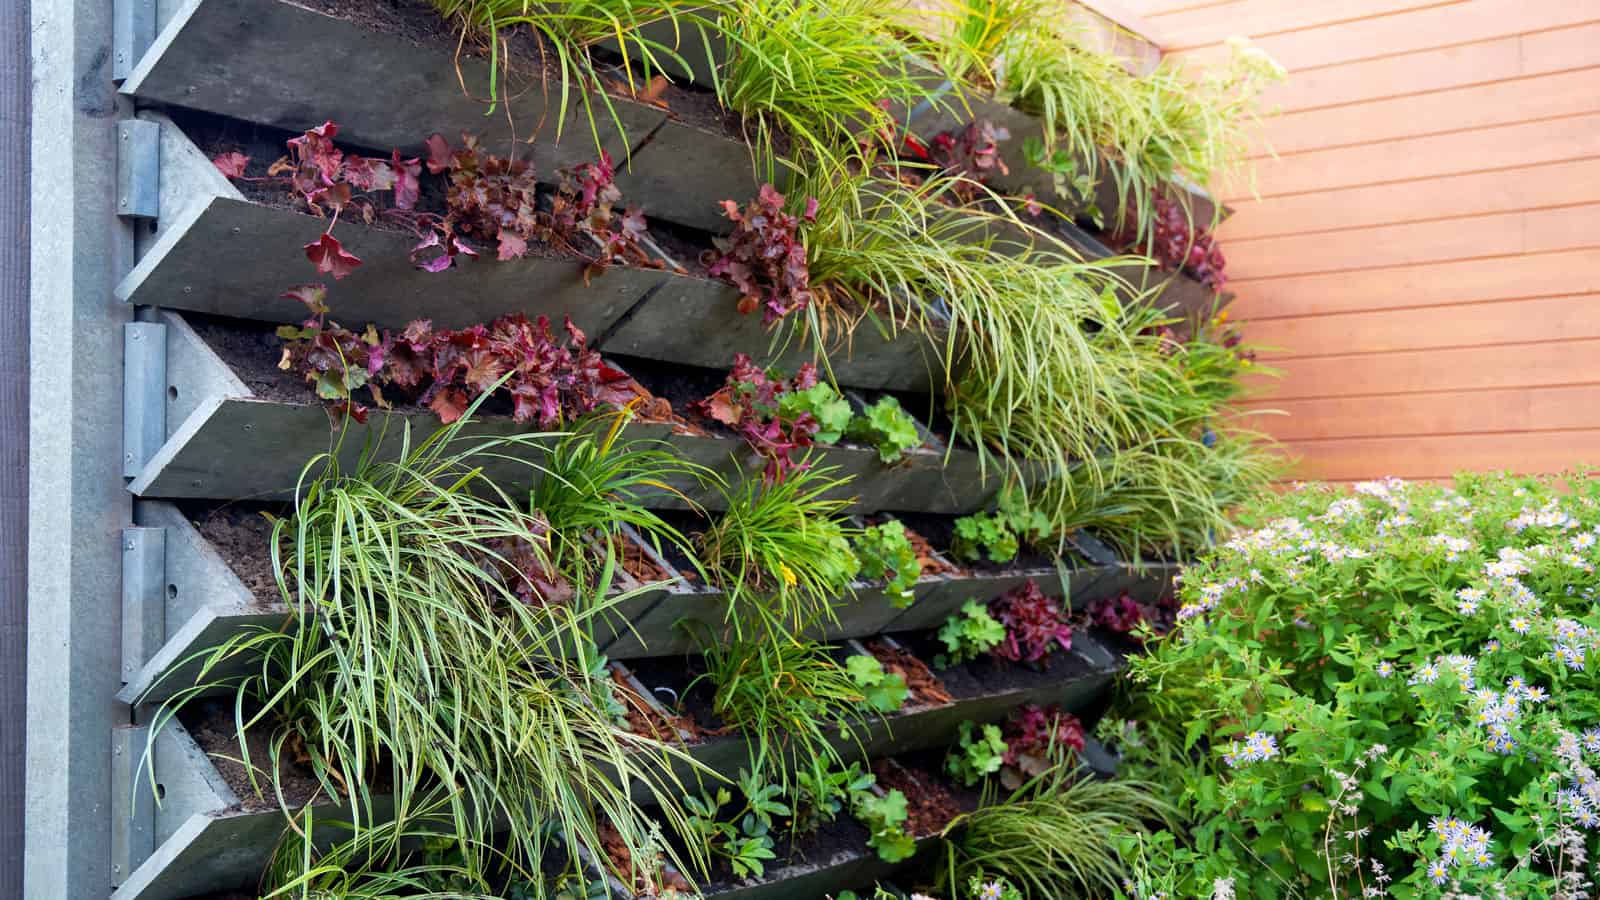 A trellis designed sustainable garden